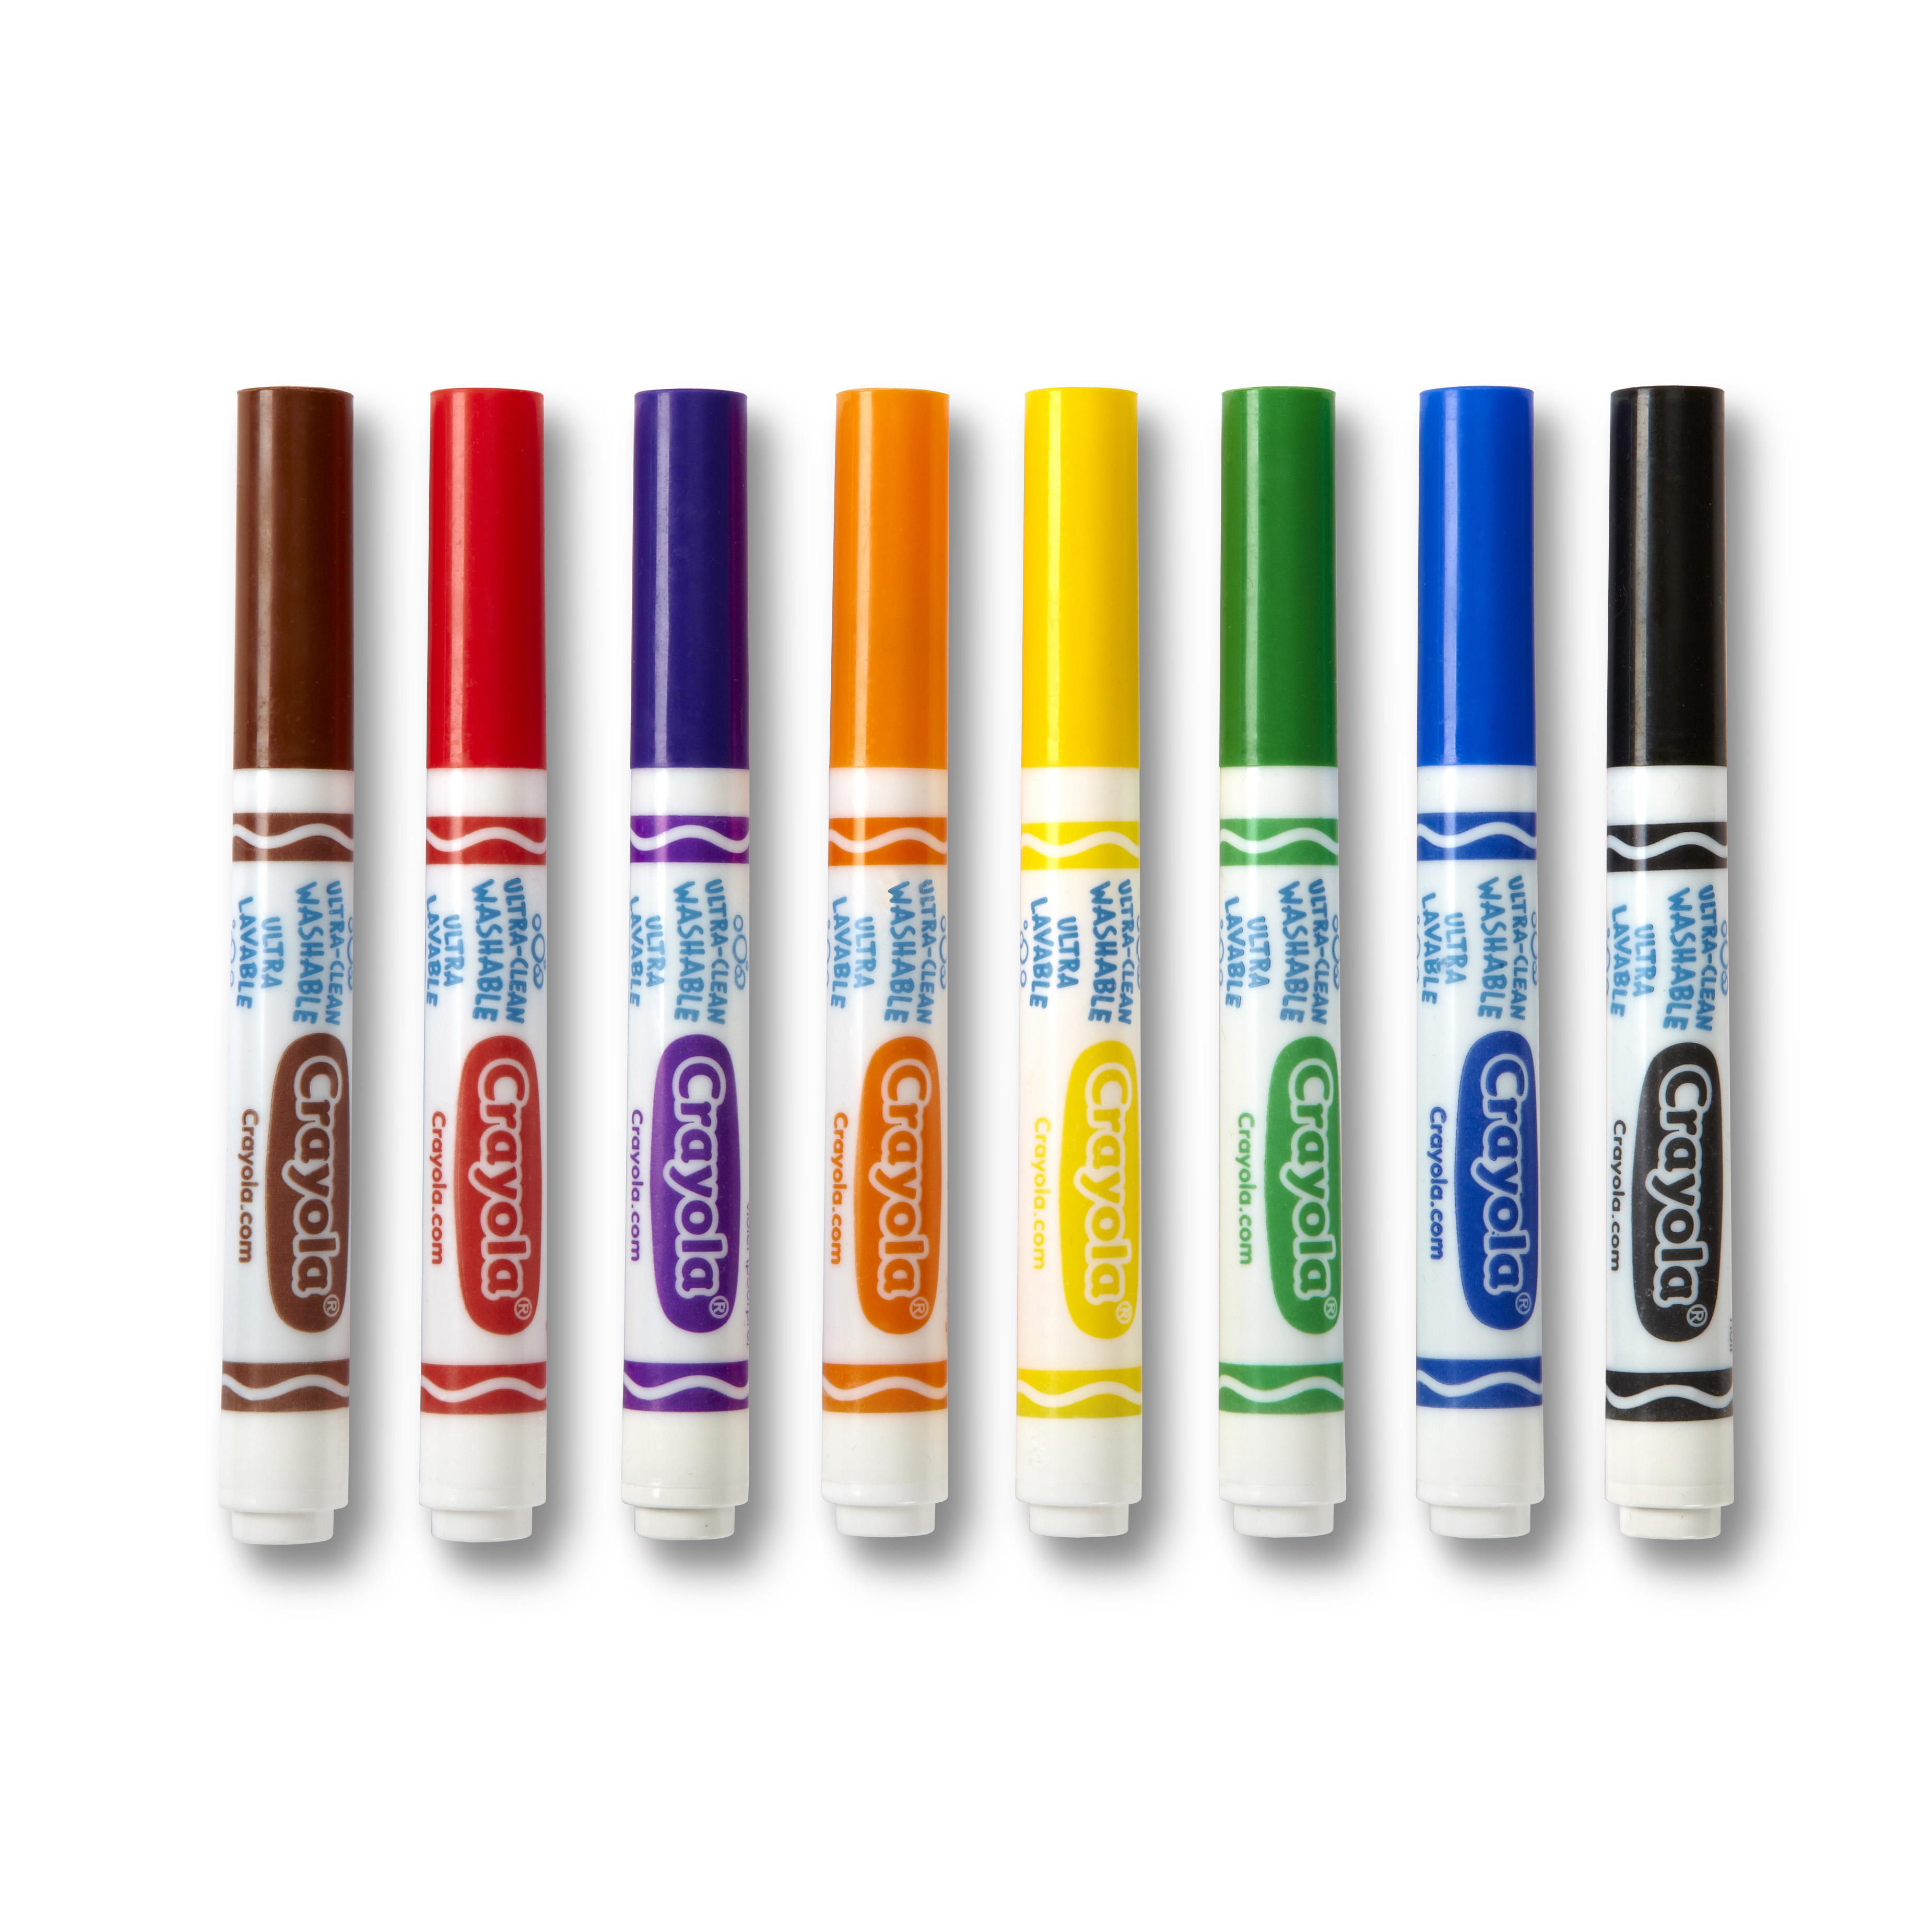 Crayola Washable Marker Set, 8-Colors, Broad, Classic - image 2 of 2